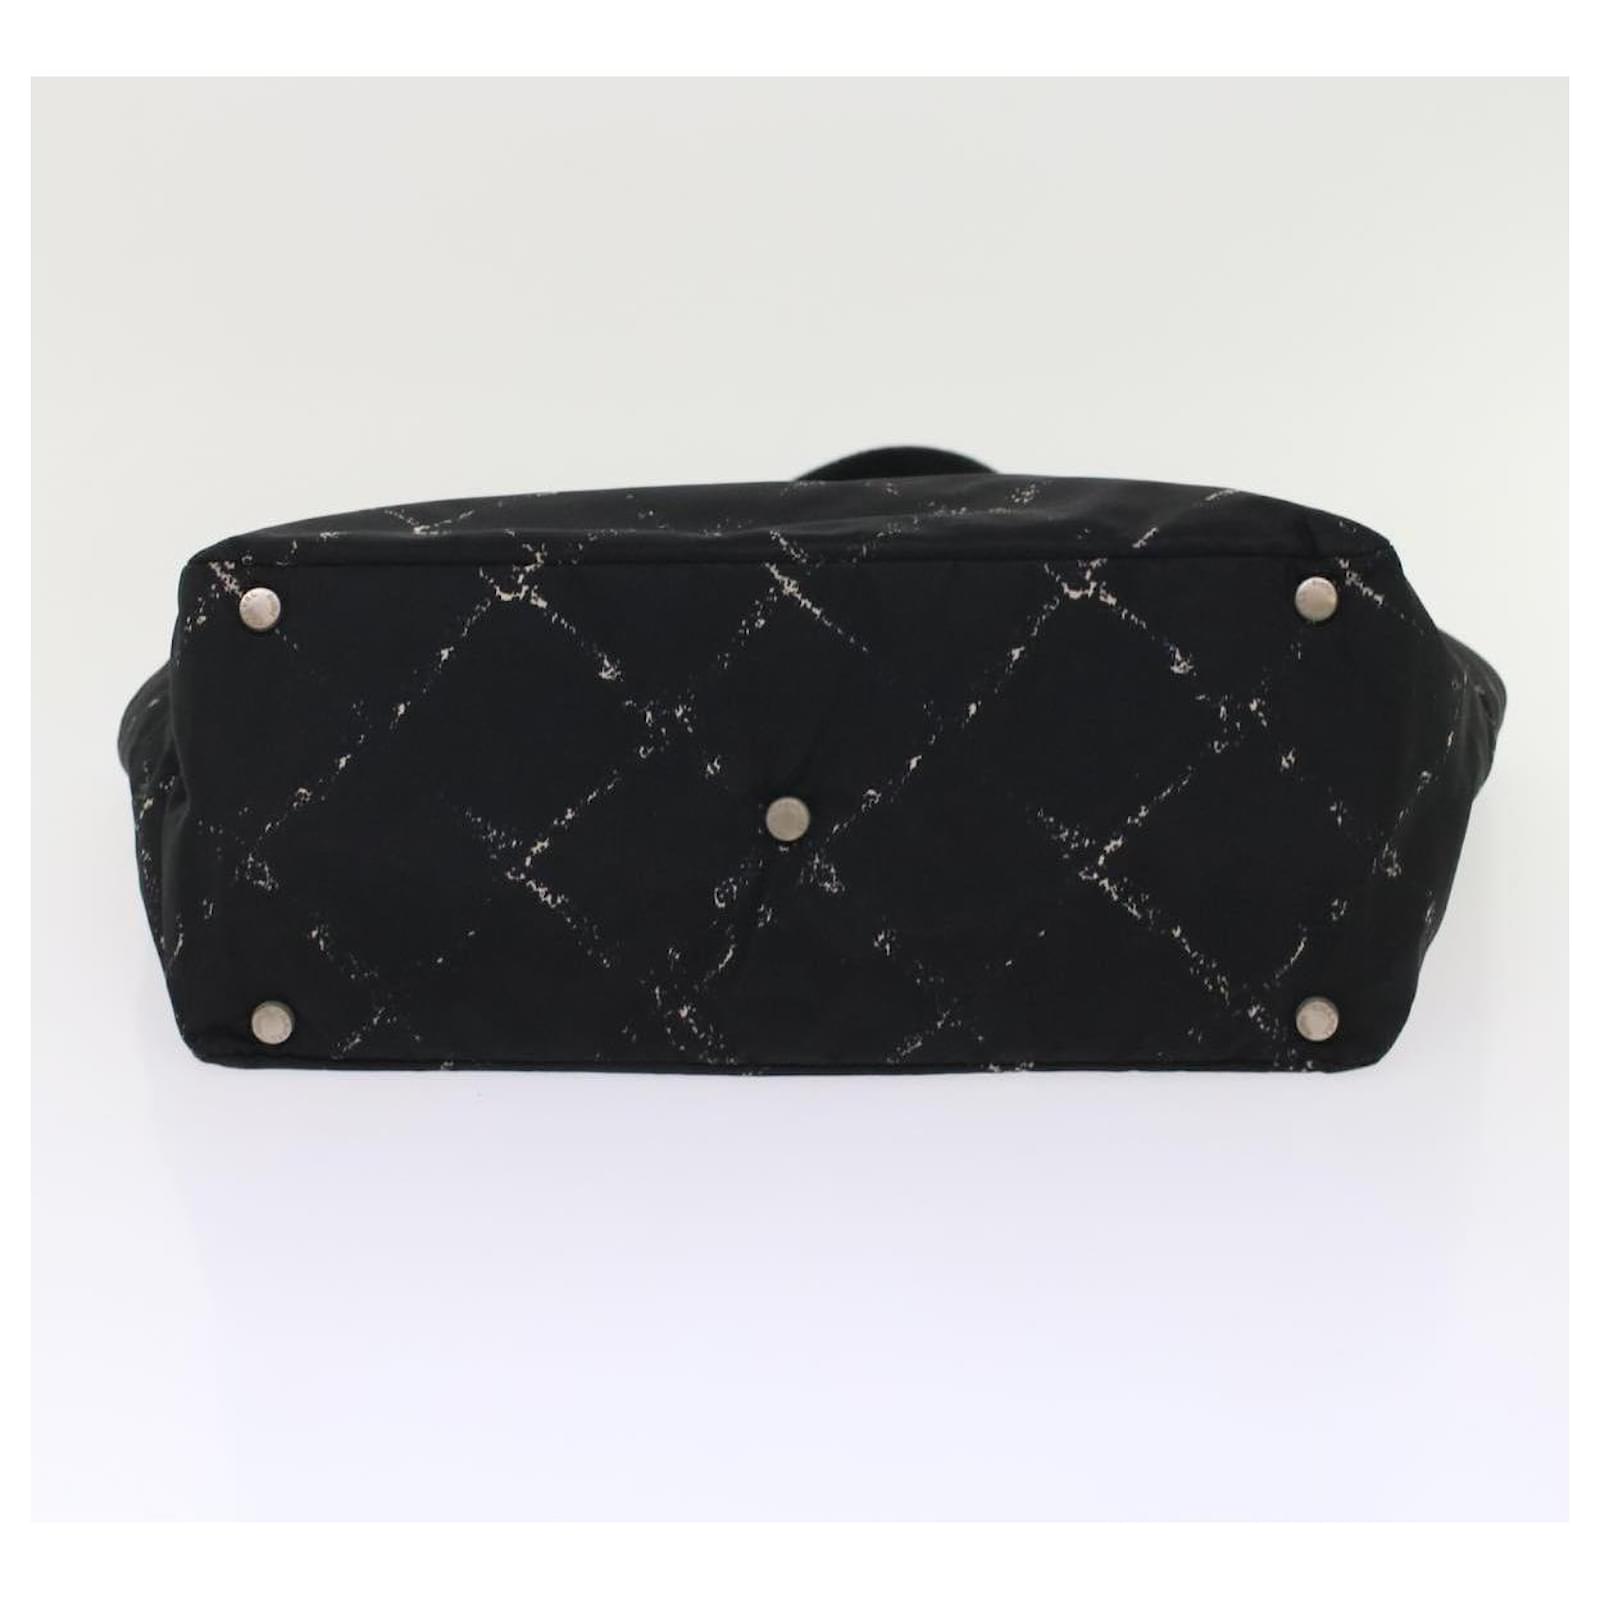 Chanel Pink Nylon New Travel Line Shoulder Bag Chanel | The Luxury Closet